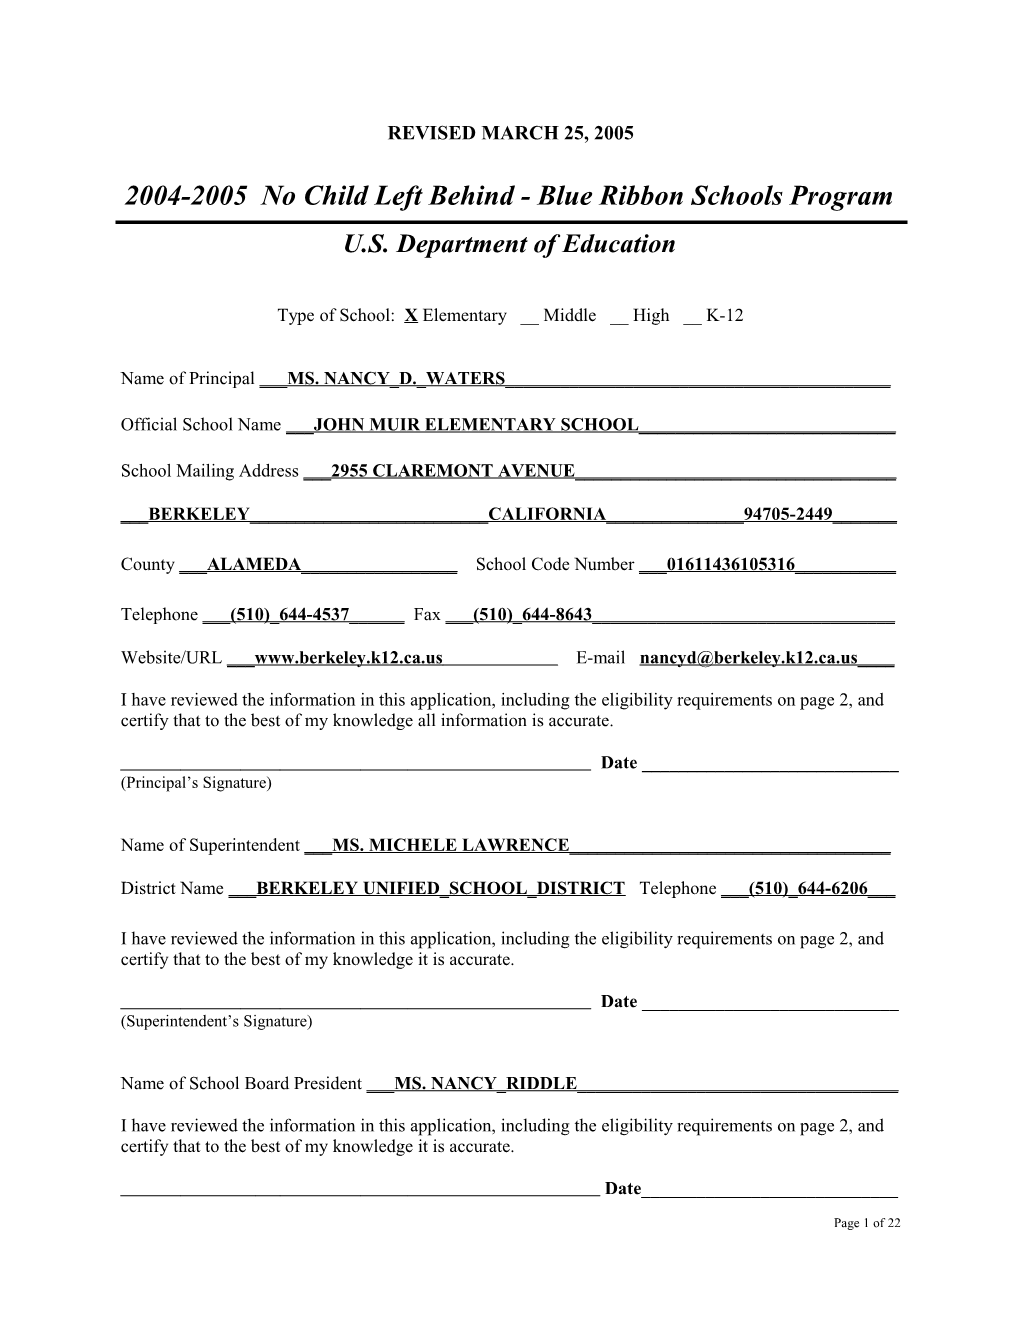 John Muir Elementary School Application: 2004-2005, No Child Left Behind - Blue Ribbon